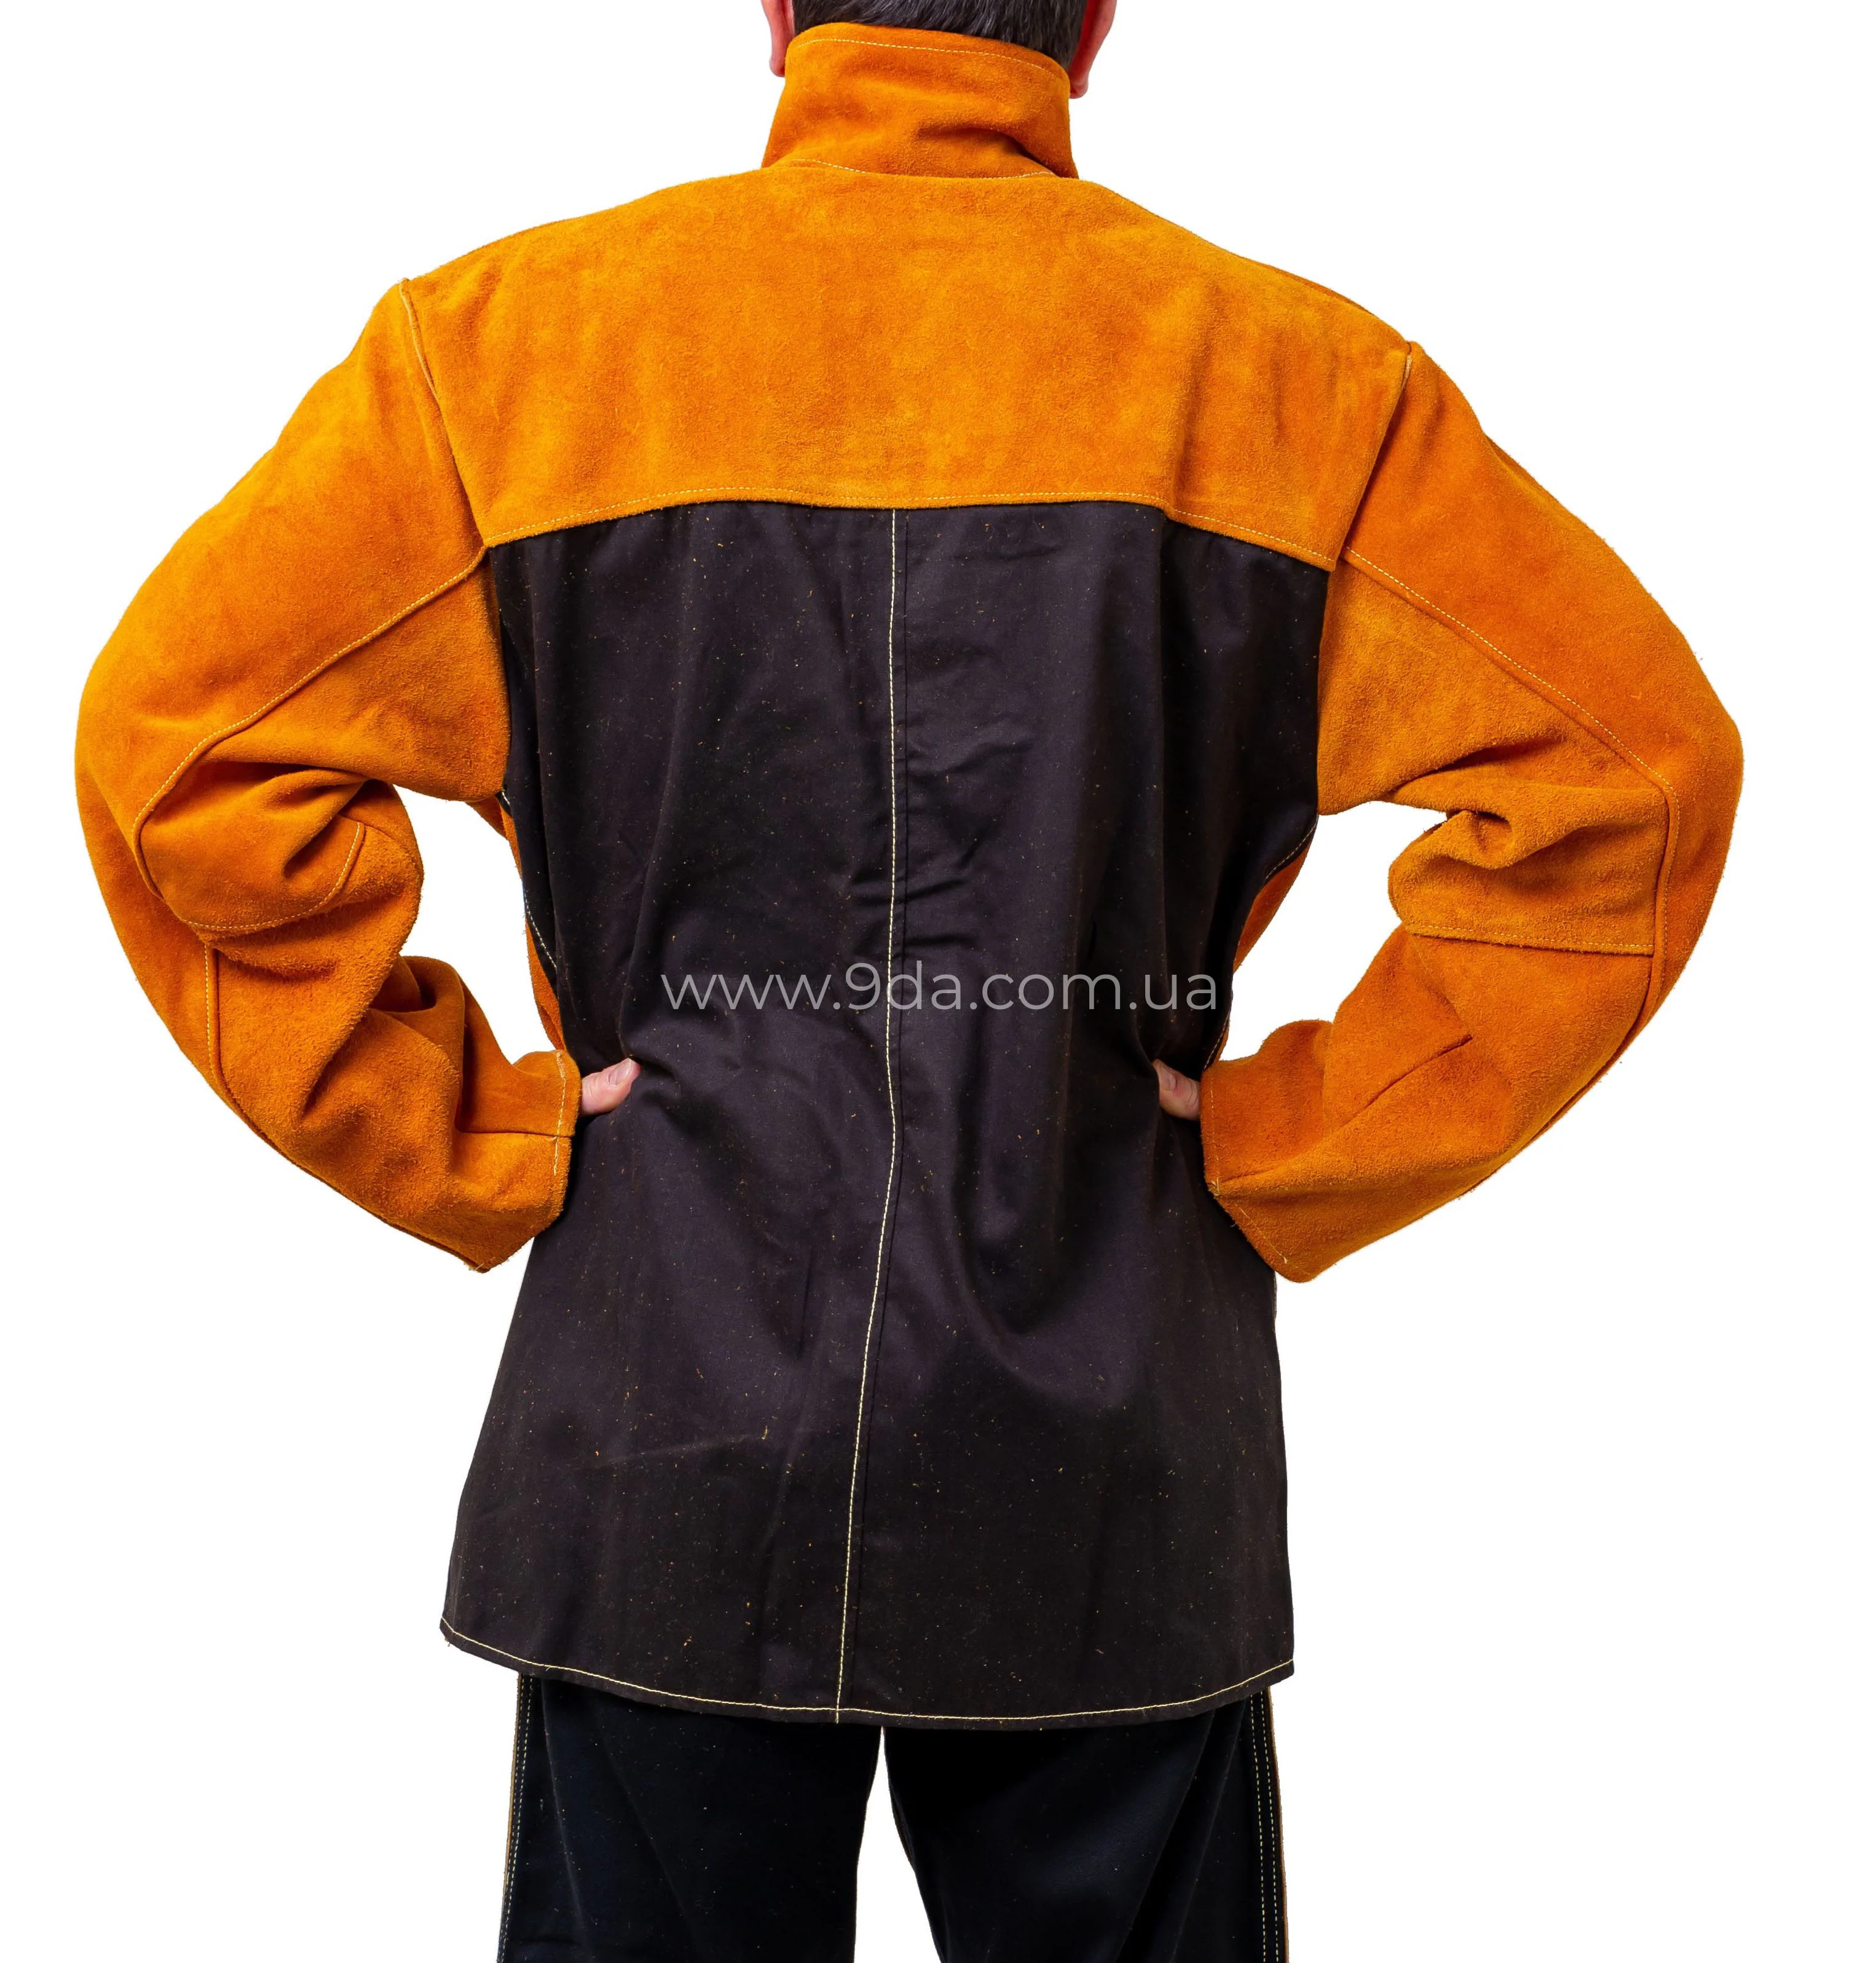 Куртка зварювальника, шкіряна, FR Front - Leather, Back Jacket Proban, size L - 4